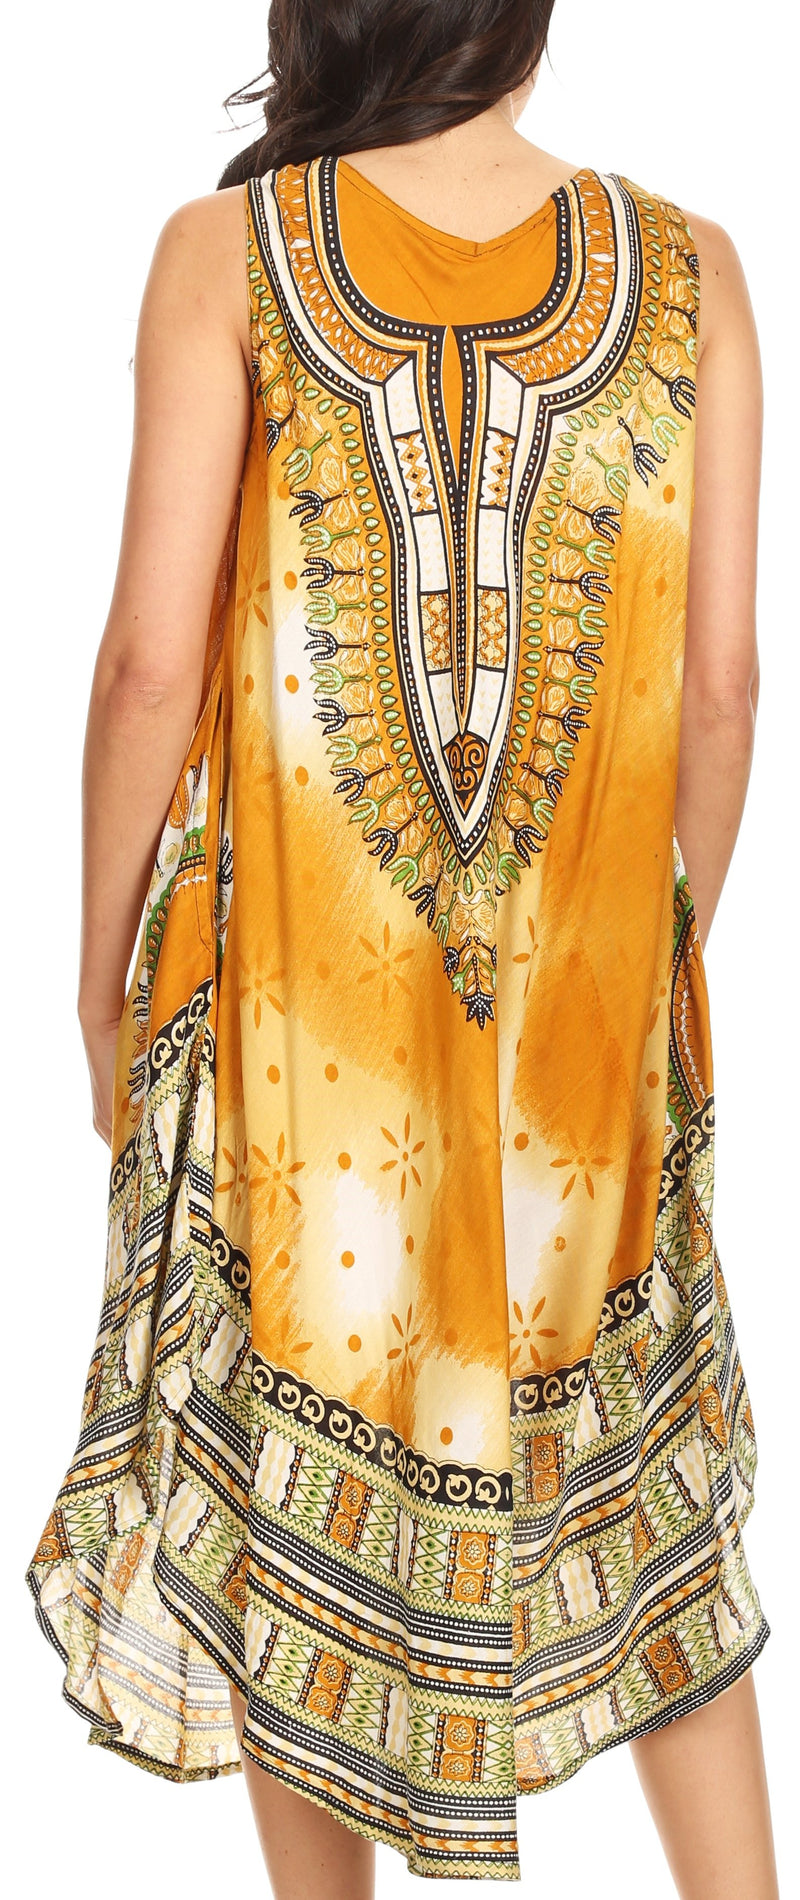 Sakkas Isla  Colorful Dashiki Sleeveless Caftan Dress / Cover up